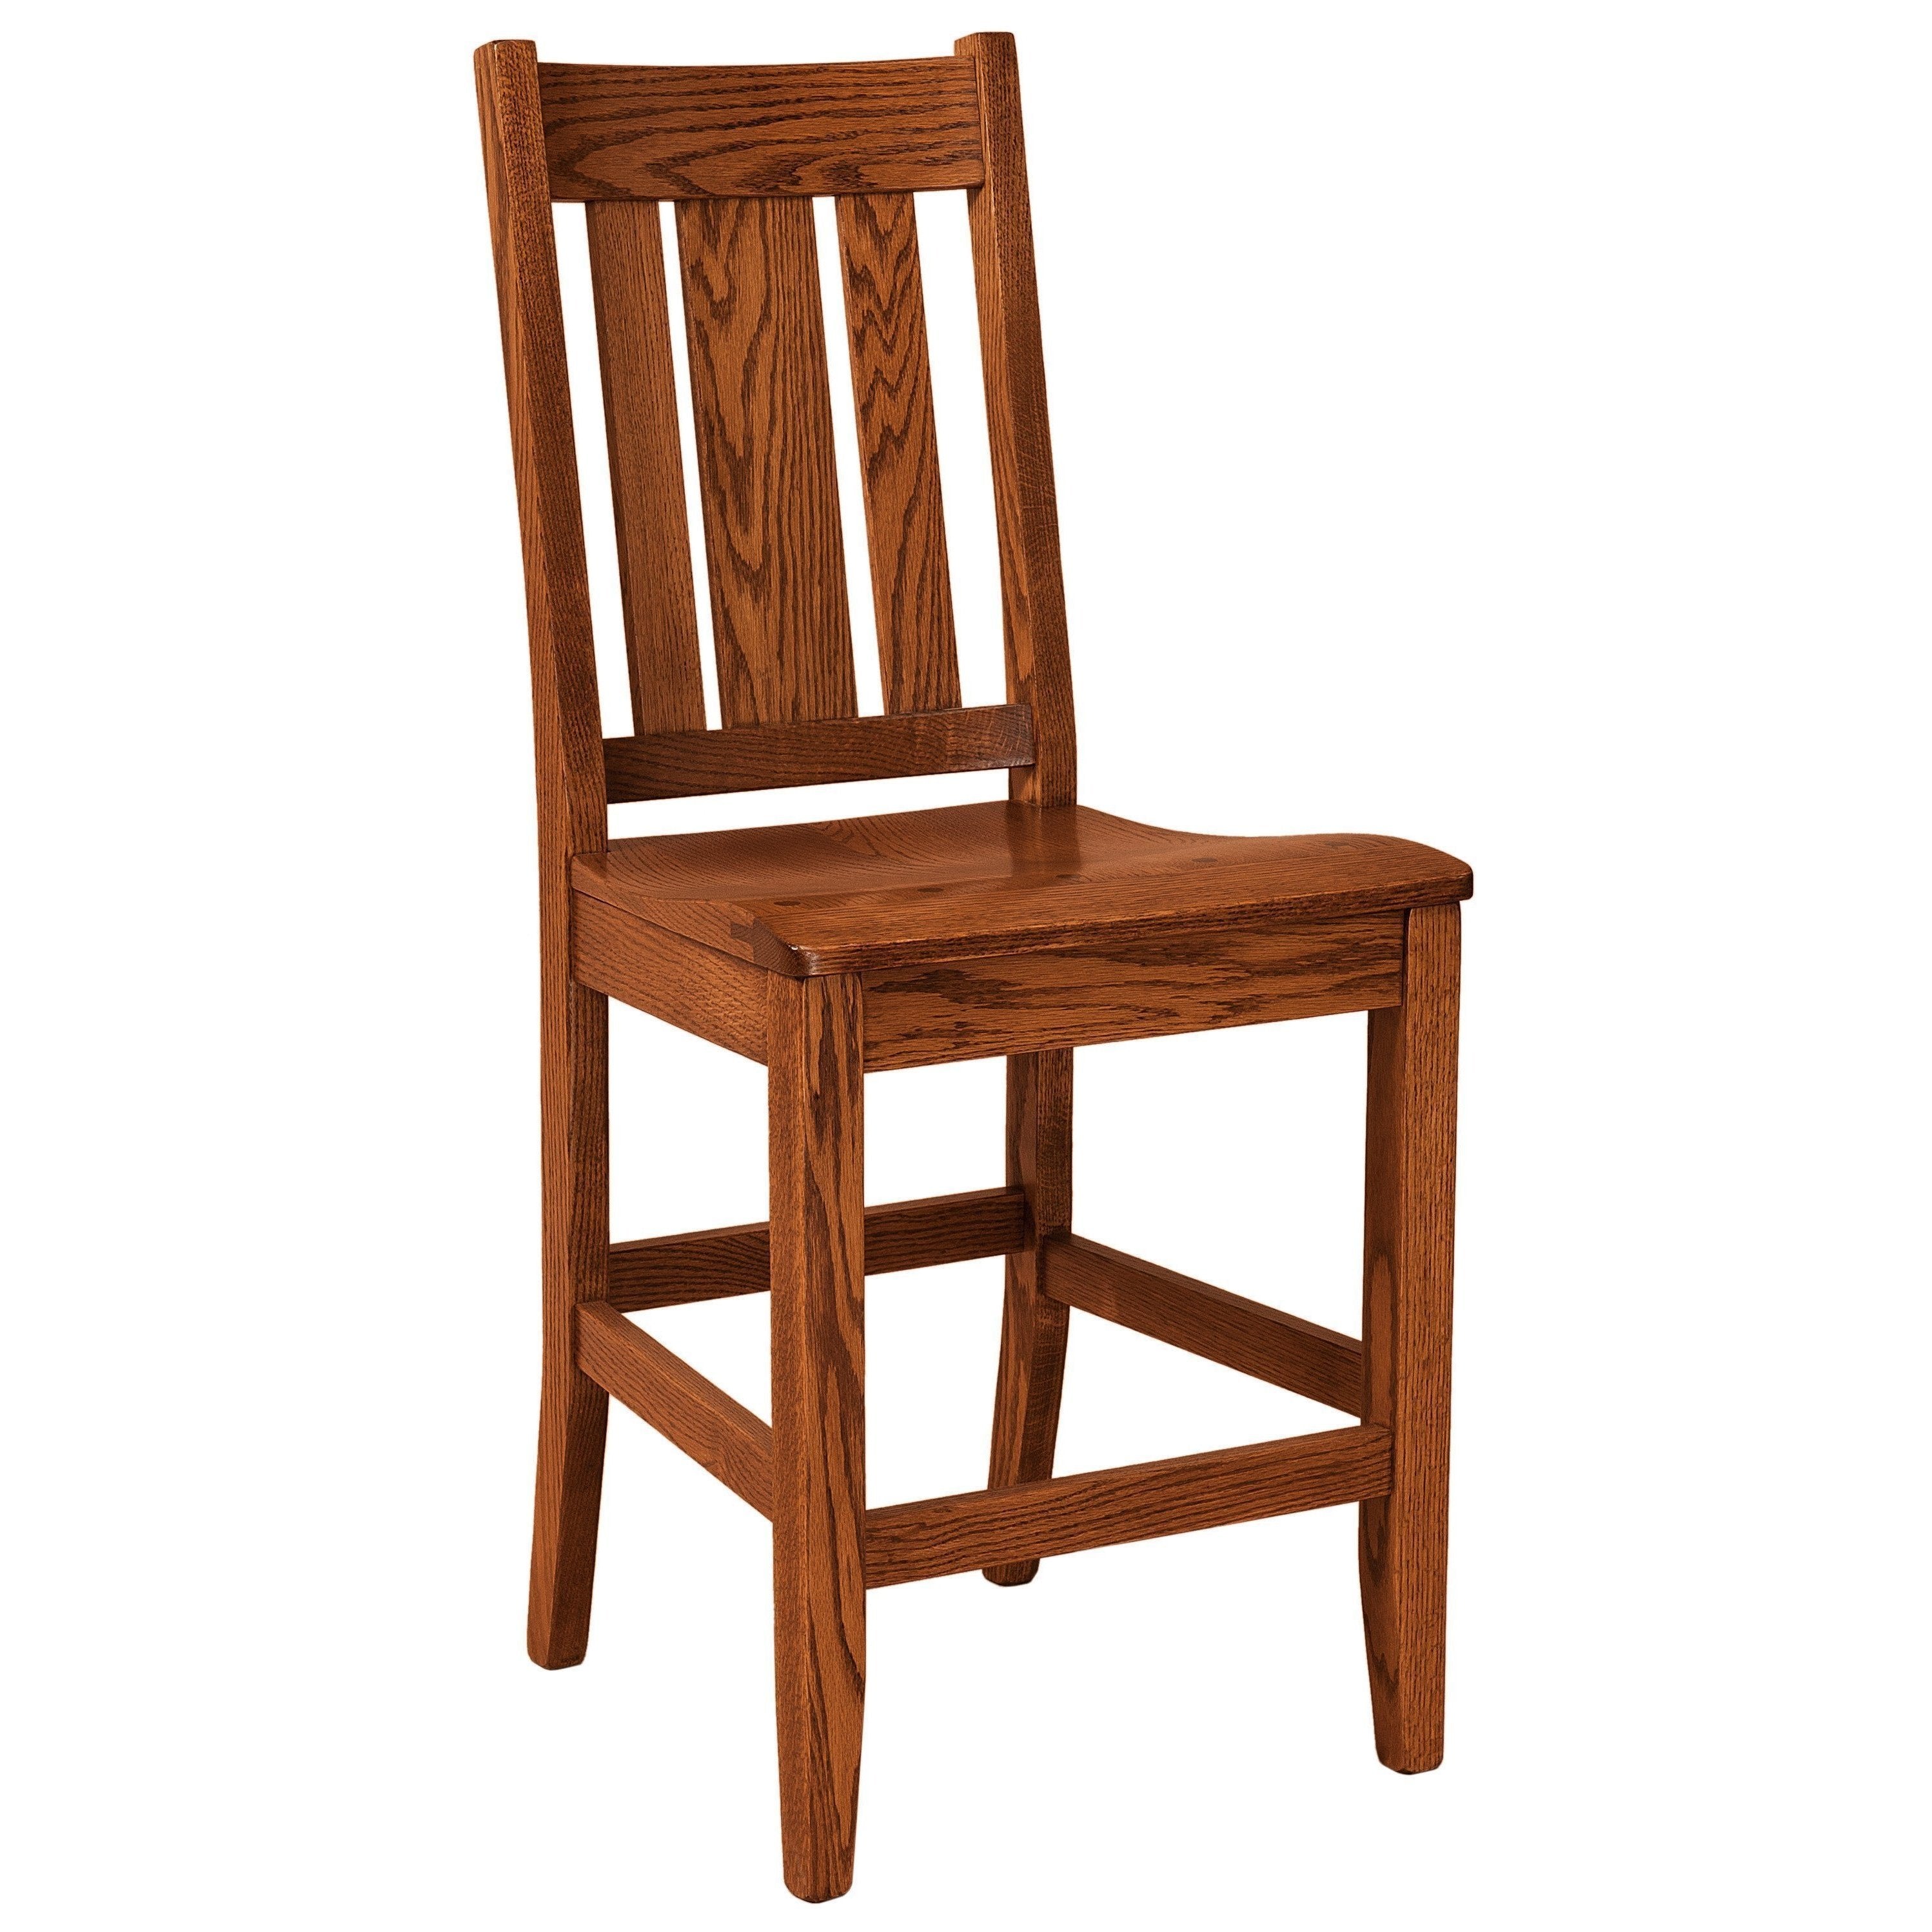 jacoby-bar-chair-260166.jpg